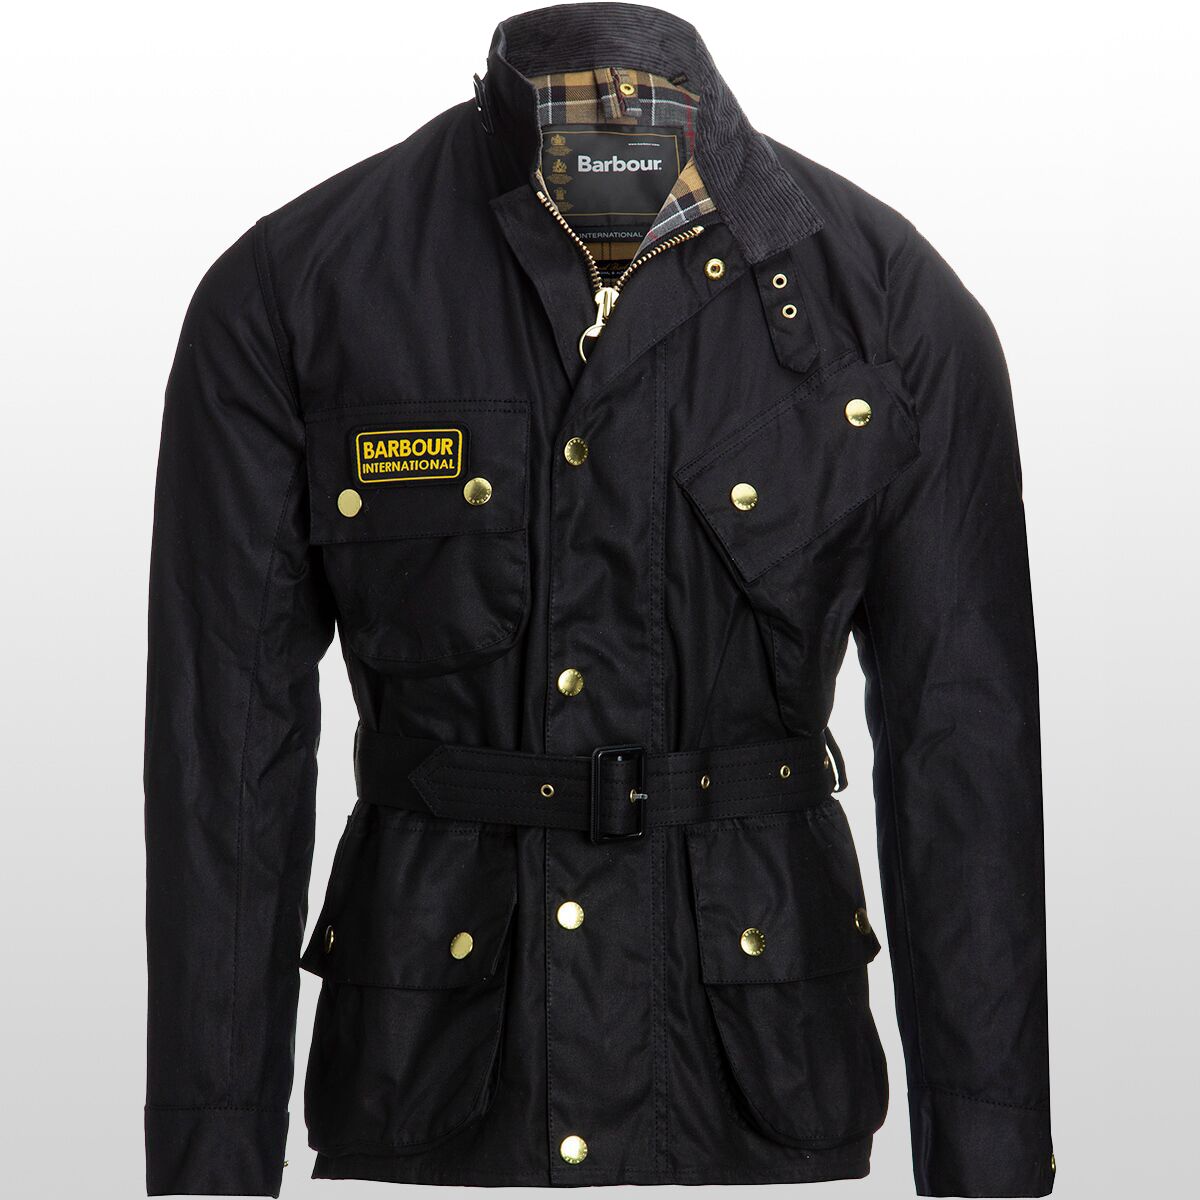 Barbour International Original Jacket - Men's - Clothing